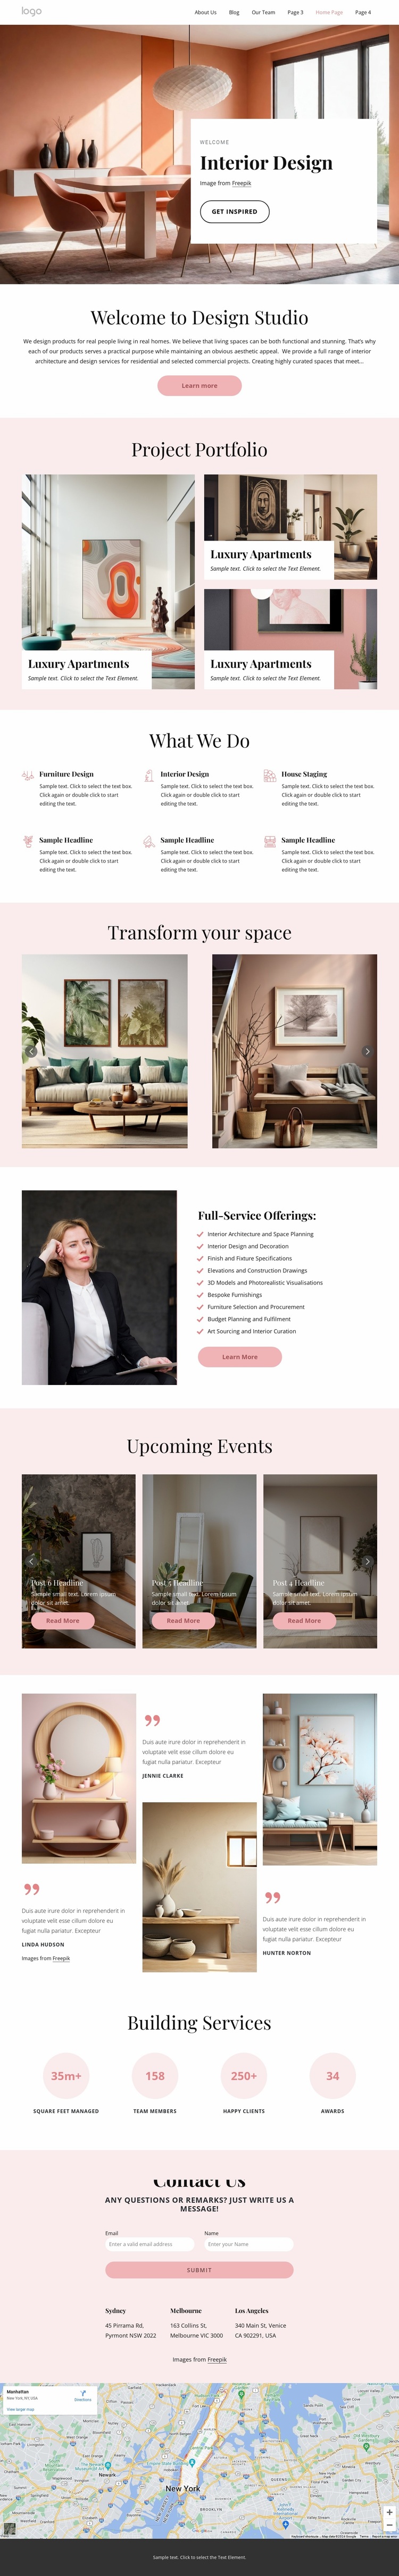 The interior design firm Website Design